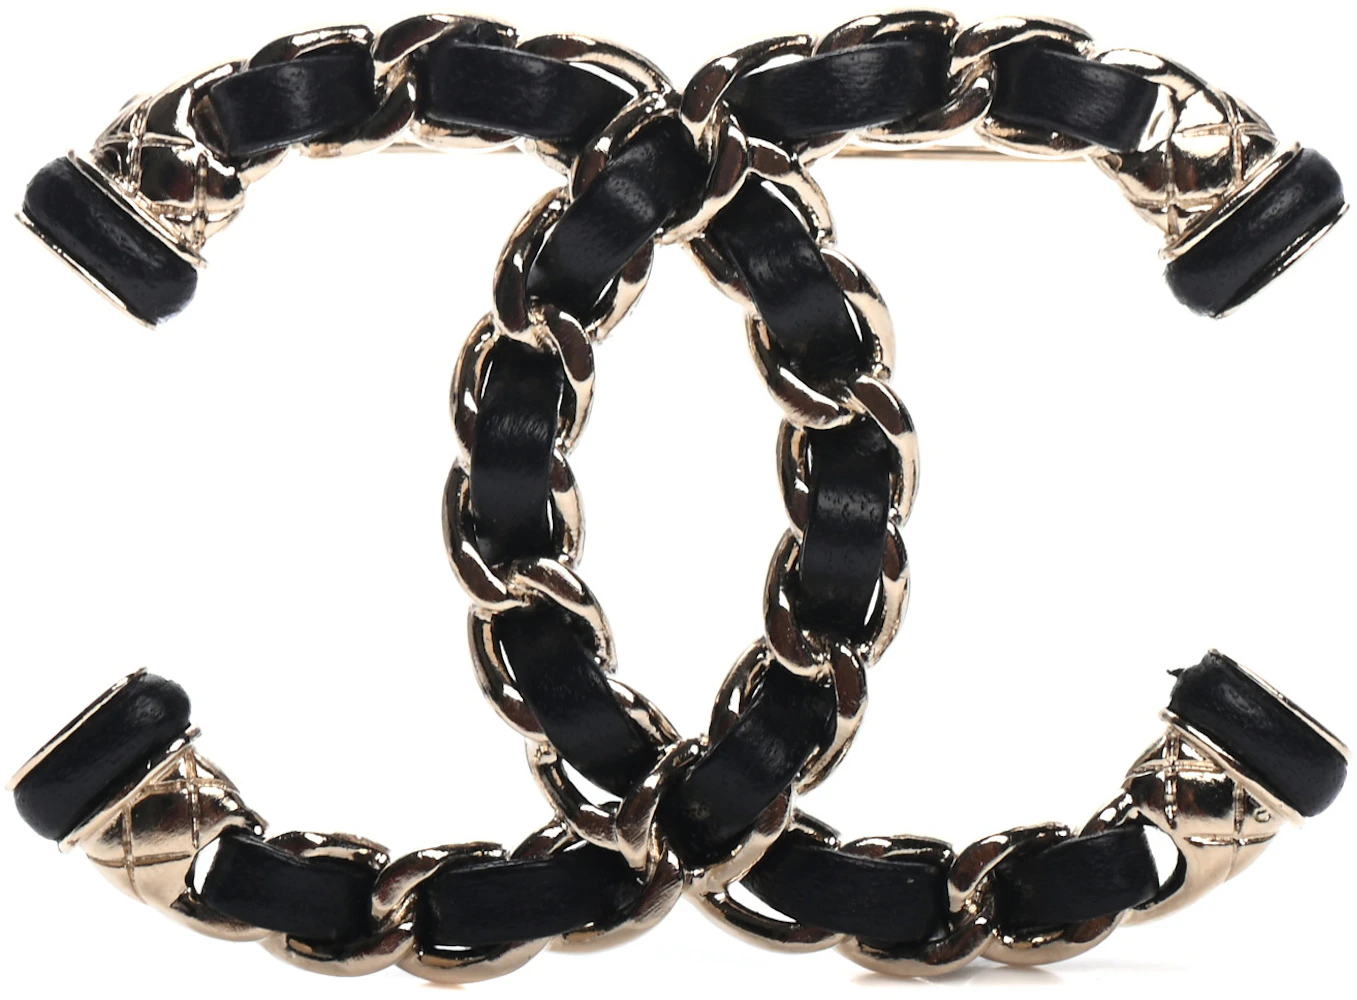 Chanel Lambskin Chain CC Brooch Black Gold in Gold Metal - US